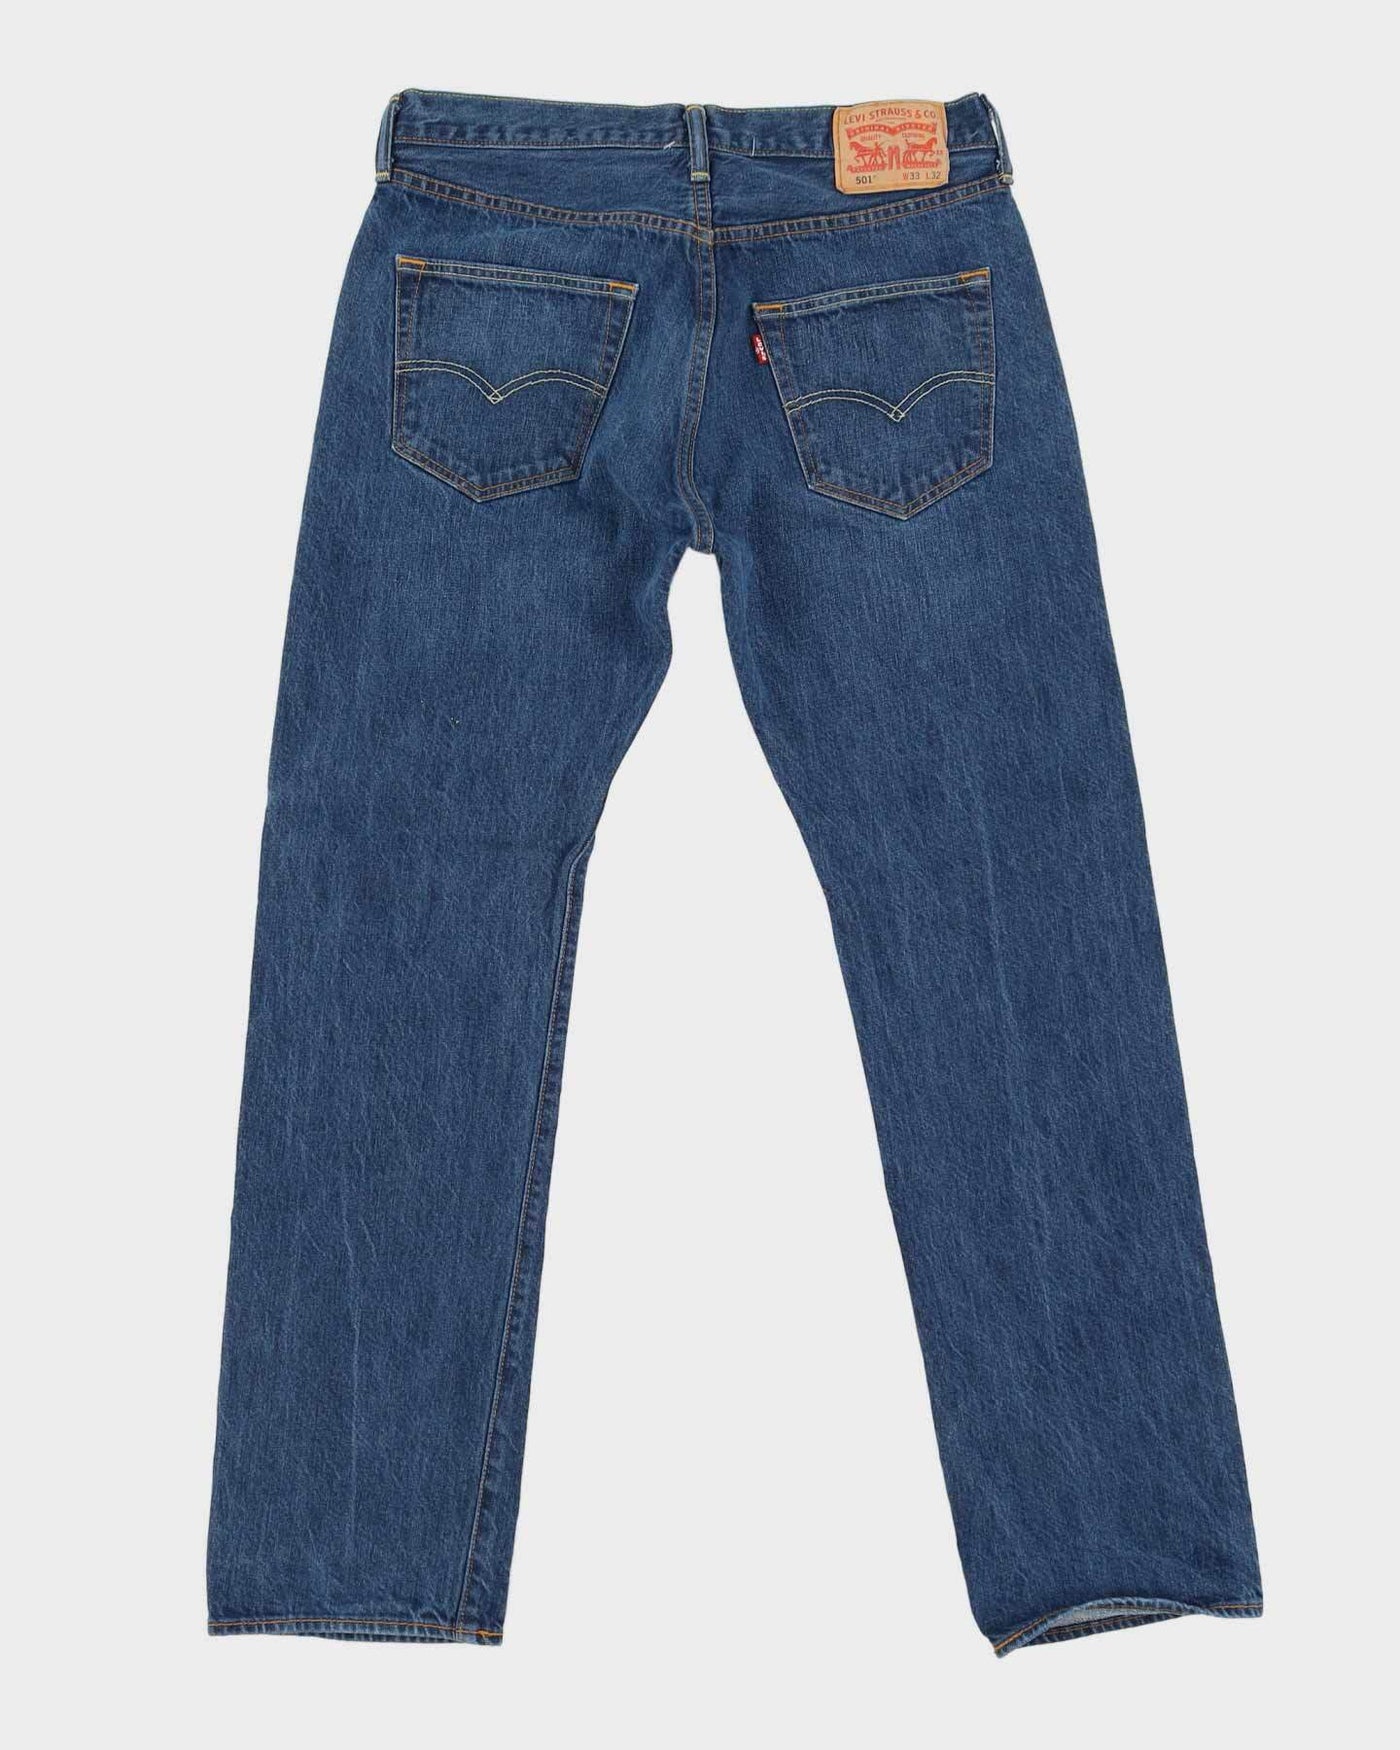 Levi's 501 Dark Washed Blue Jeans - W33 L32